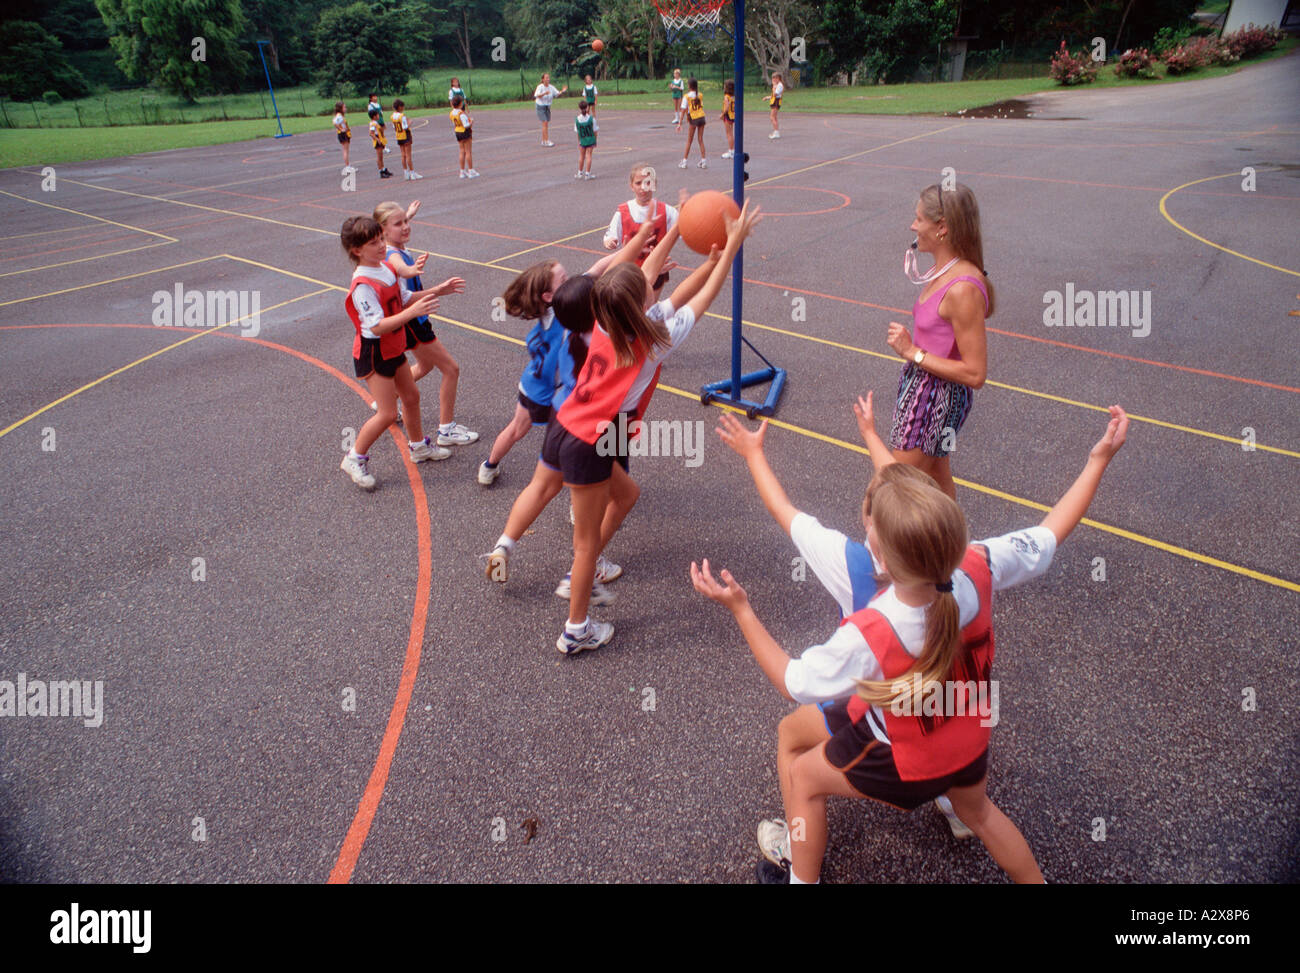 School children playing netball game in outdoors playground. Stock Photo